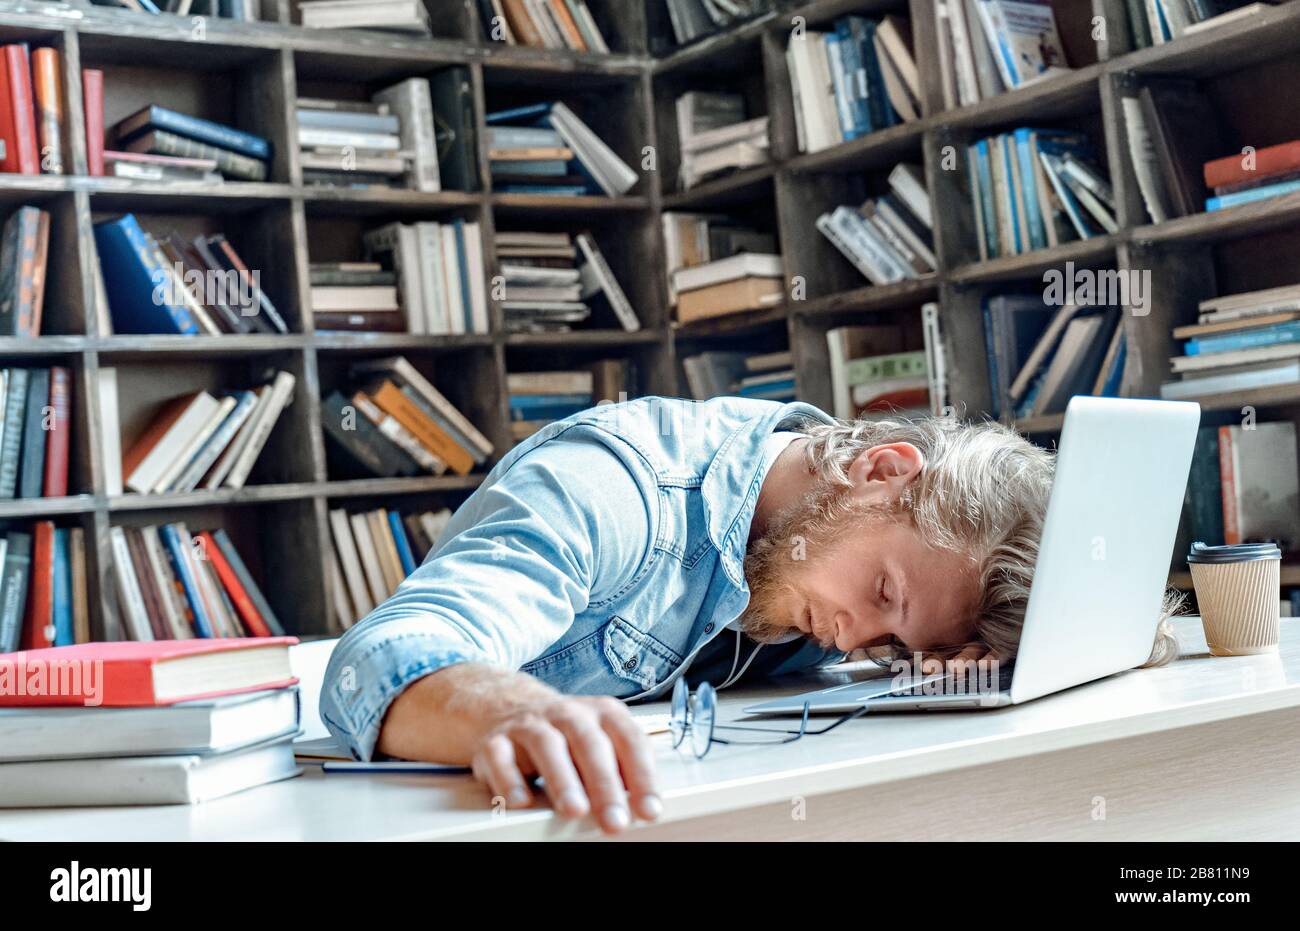 Funny tired sleepy university student sleeping sitting at library desk. Stock Photo